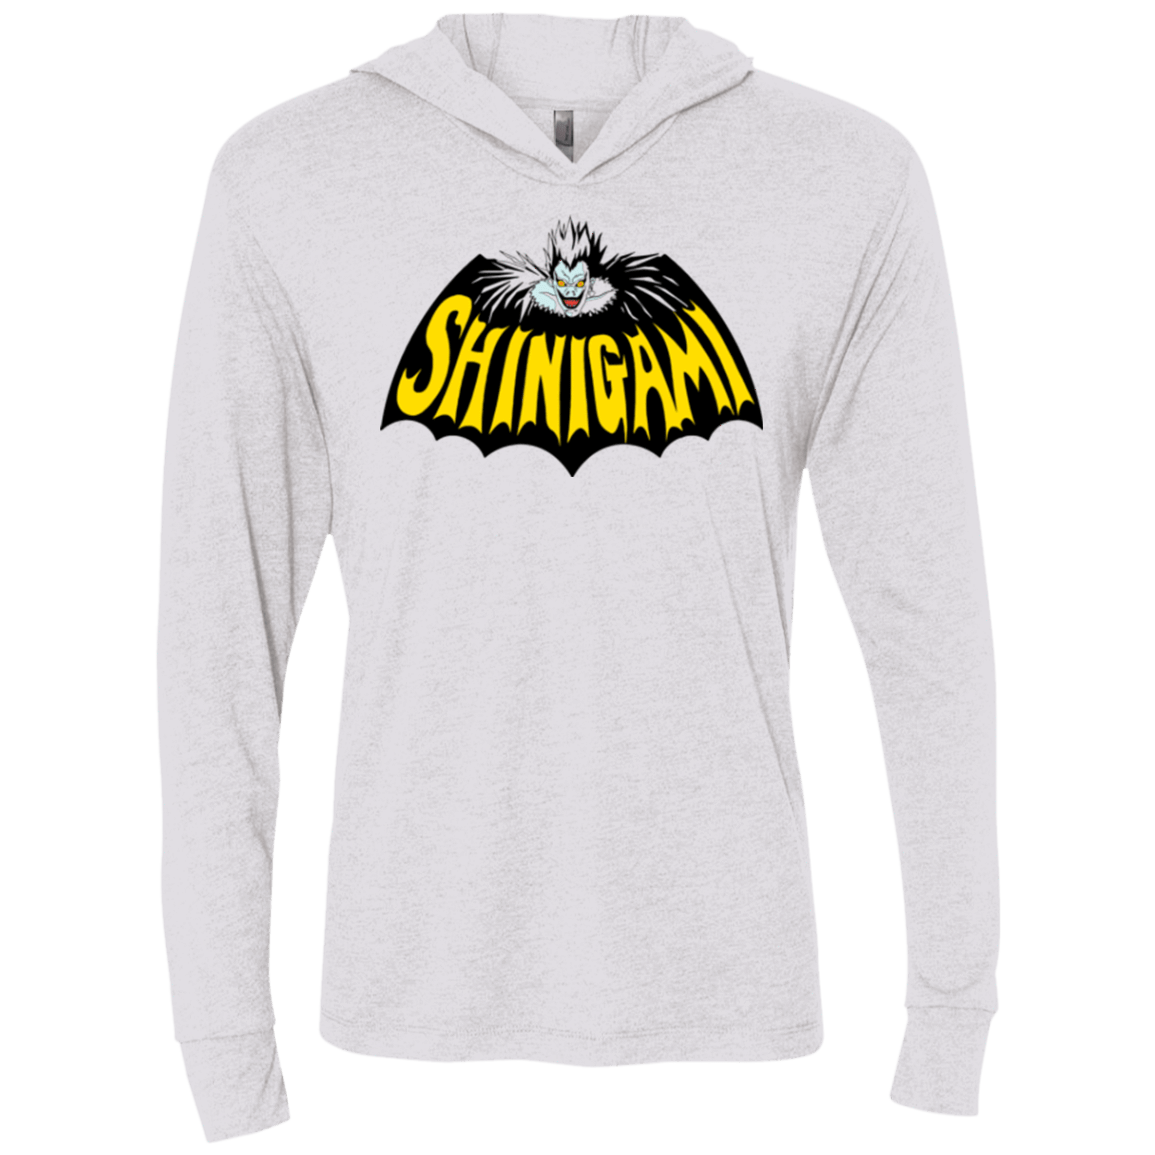 T-Shirts Heather White / X-Small Bat Shinigami Triblend Long Sleeve Hoodie Tee